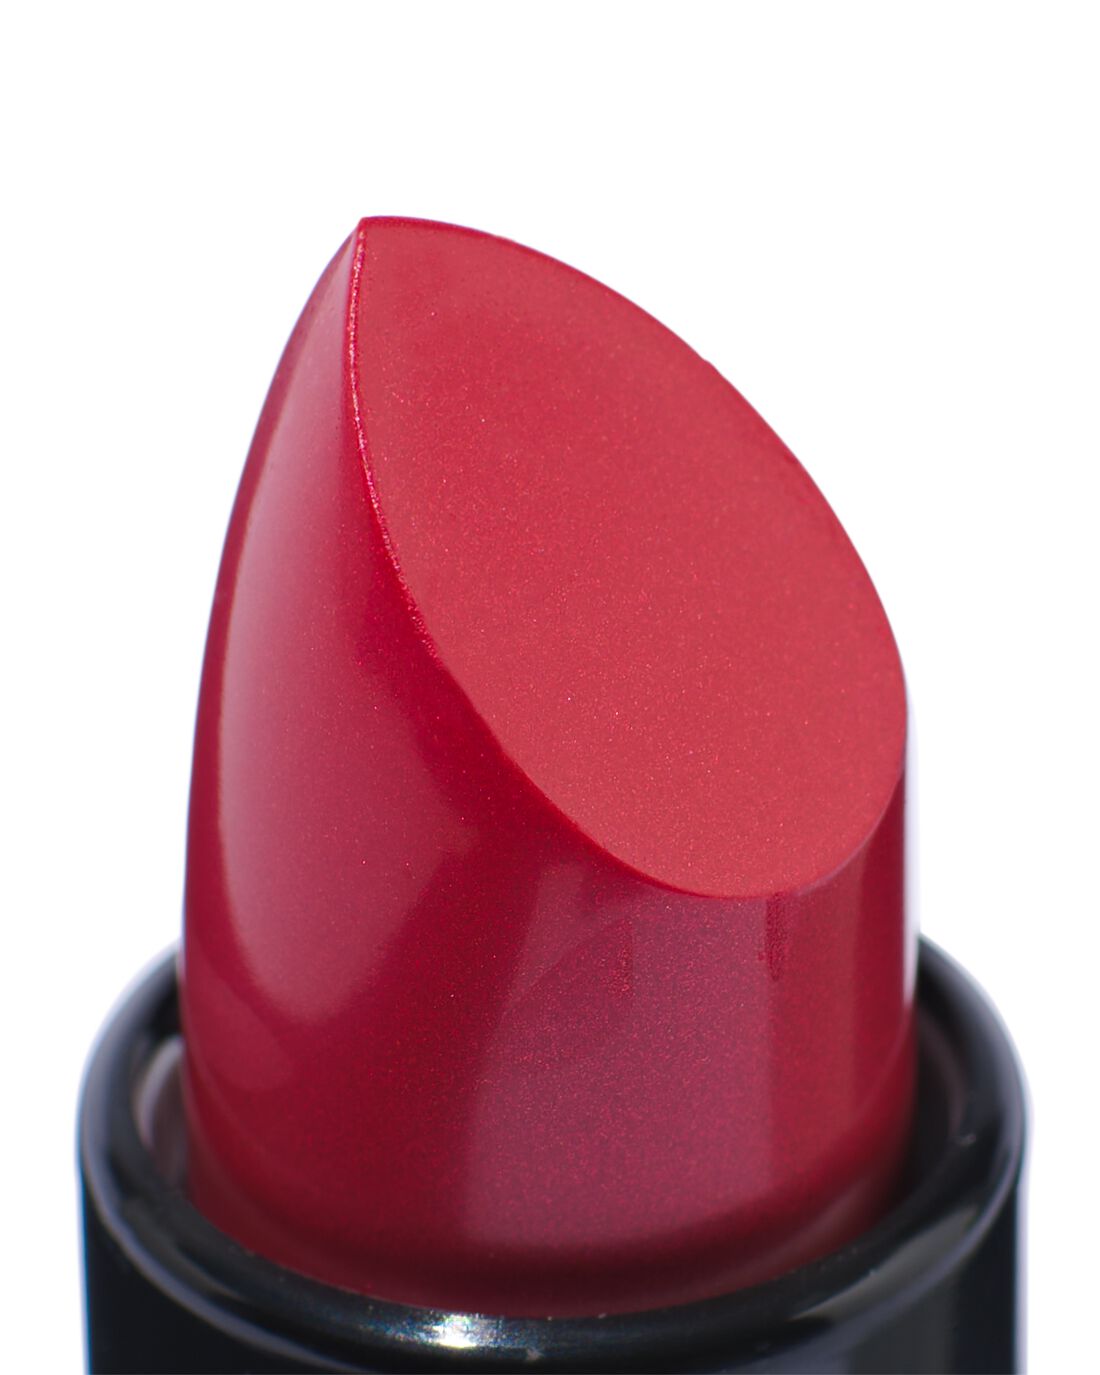 HEMA Lipstick Moisturizing 18 Moody Merlot (donkerrood)